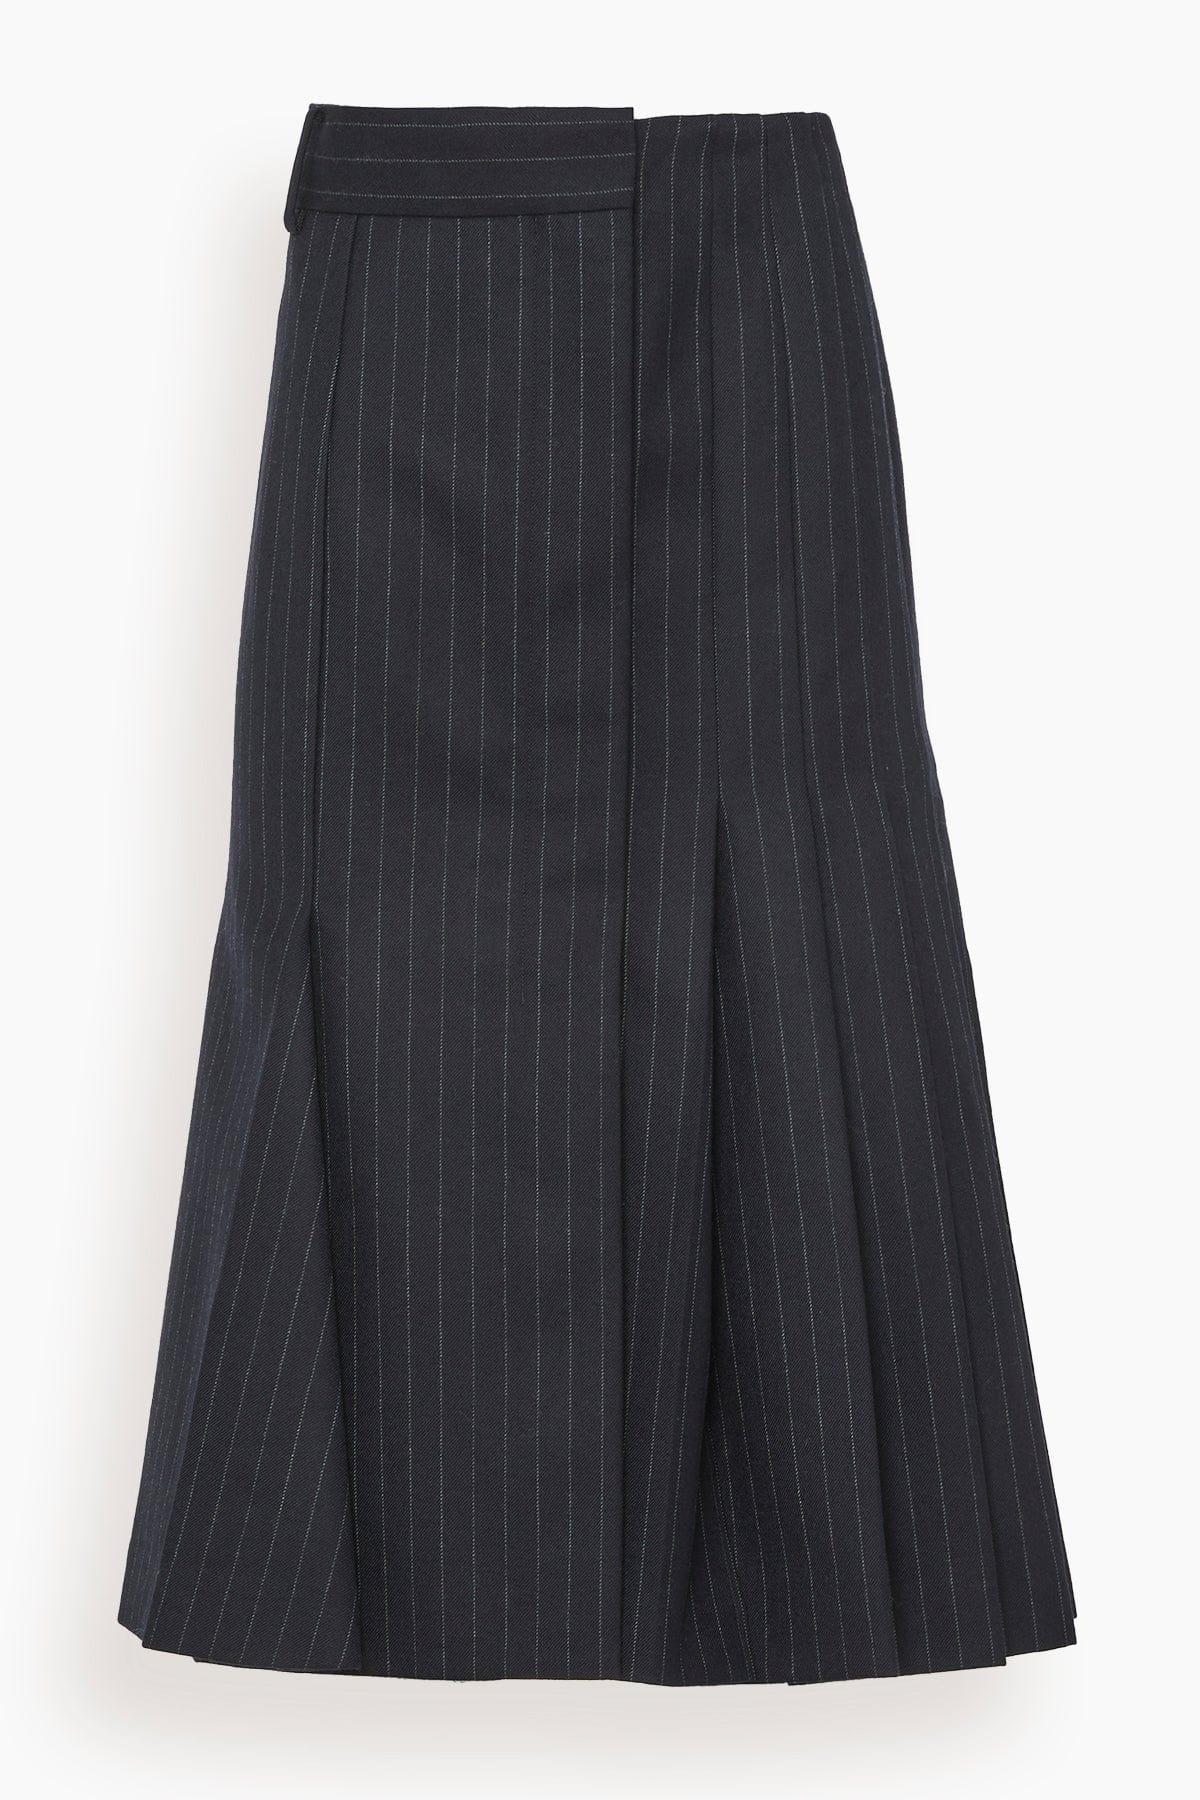 Sacai Chalk Stripe Skirt in Black | Lyst